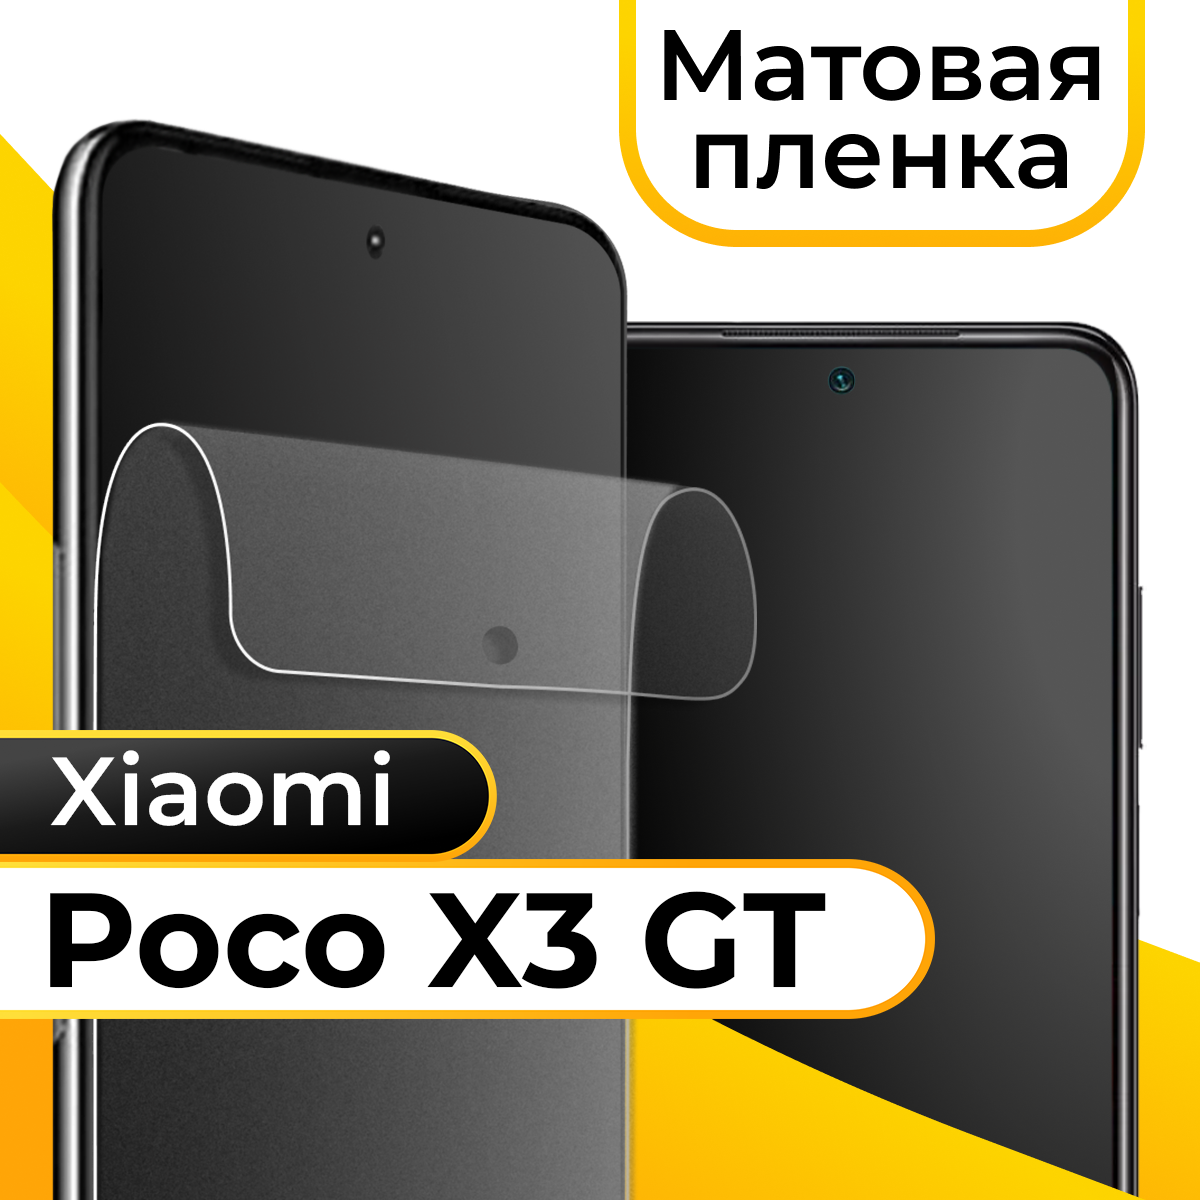 Матовая пленка для смартфона Xiaomi Poco X3 GT / Защитная противоударная пленка на телефон Сяоми Поко Х3 ГТ / Гидрогелевая пленка